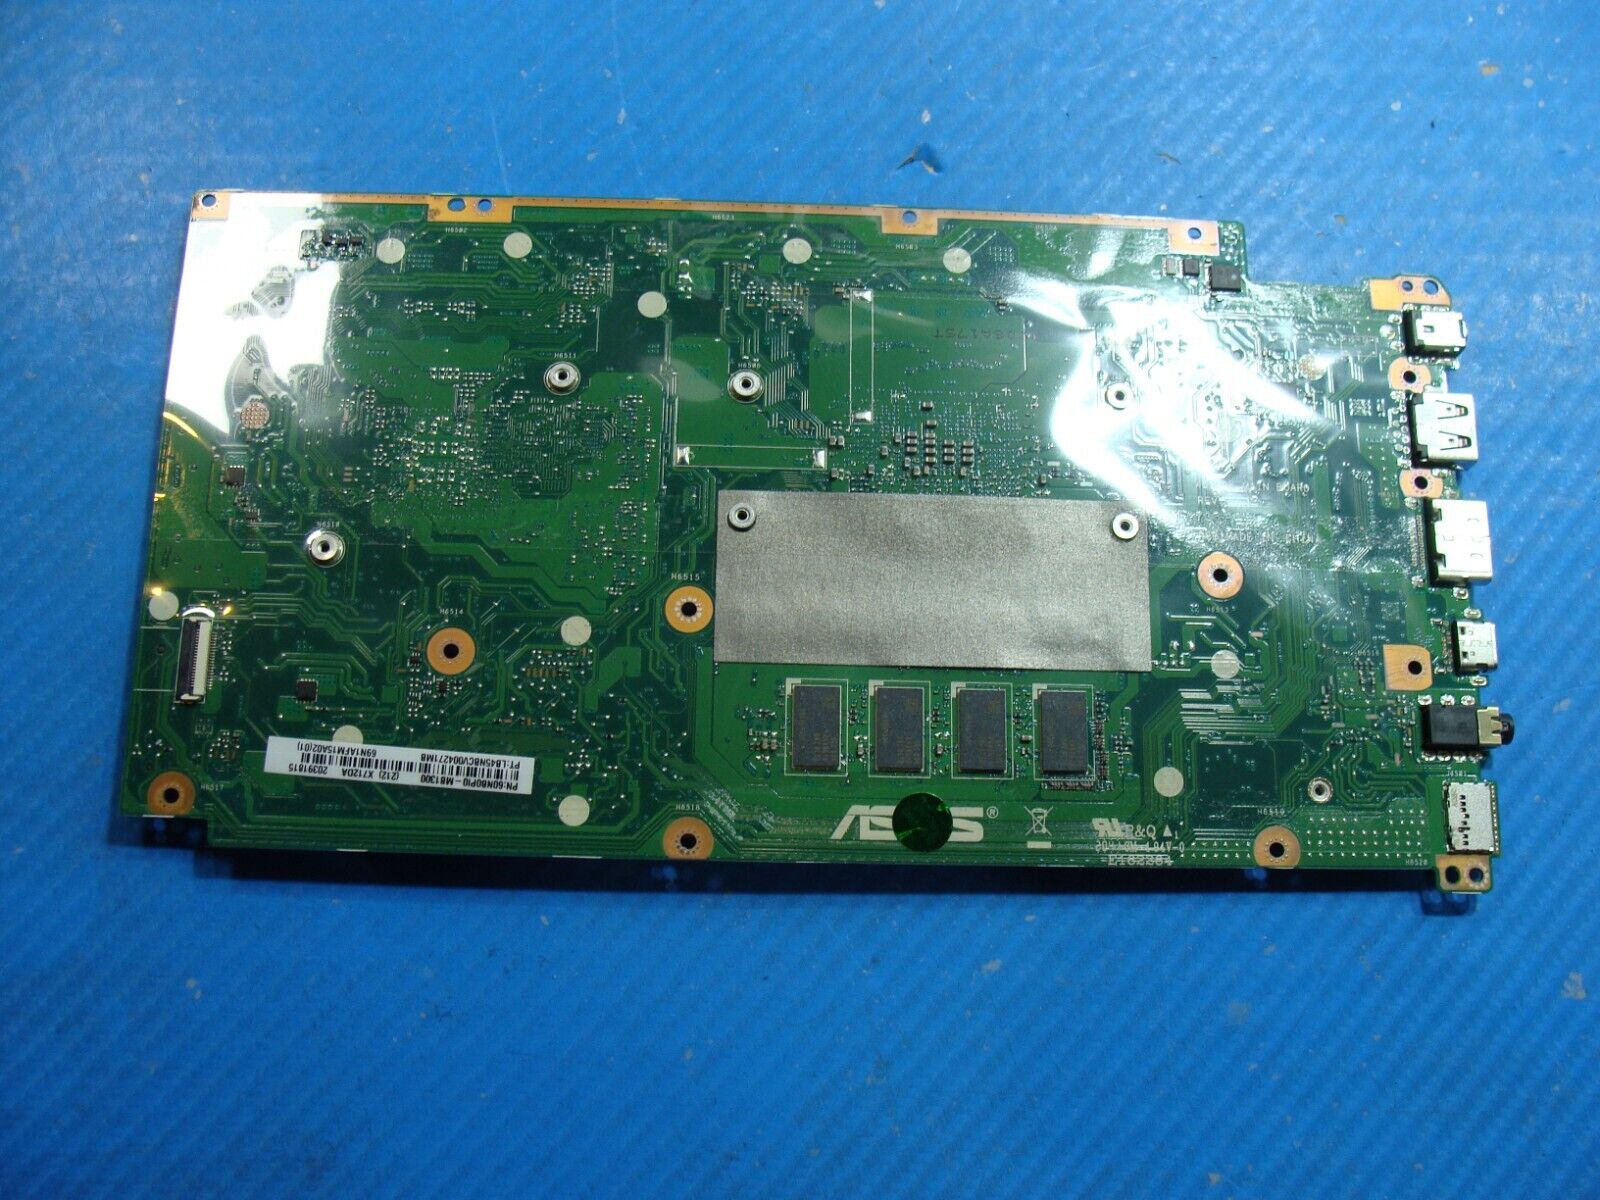 Asus VivoBook M712DA 17.3 AMD RYZEN 7 3700U 2.3GHz Motherboard 60NB0PI0-MB1300